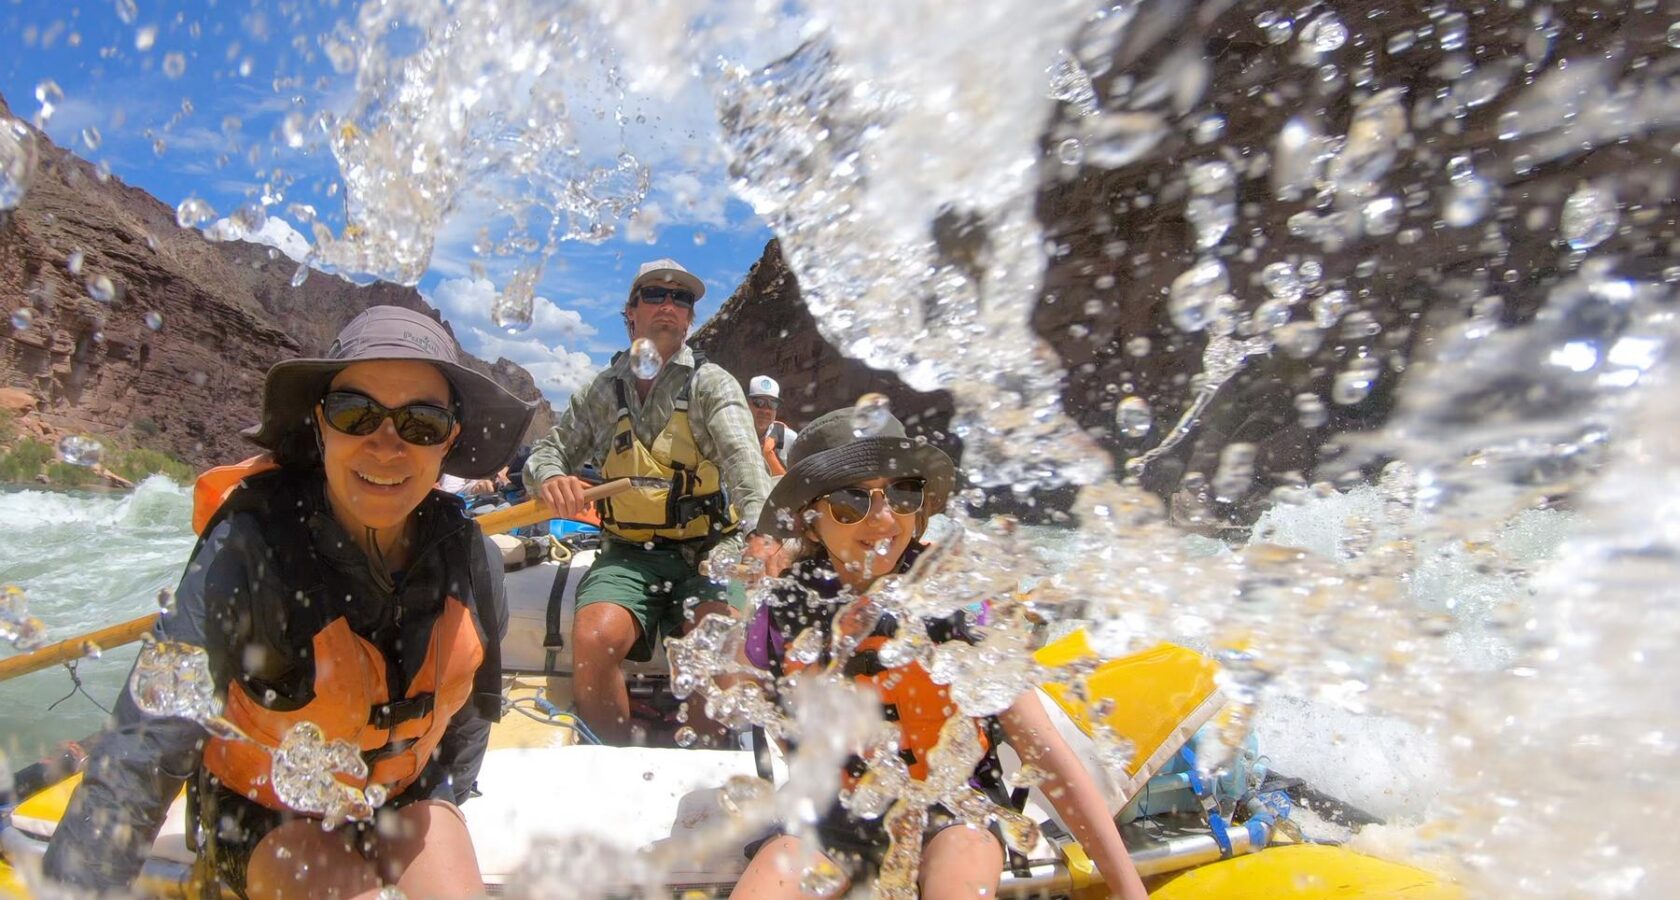 Rafters splashing through a rapid on a Grand Canyon rafting trip.